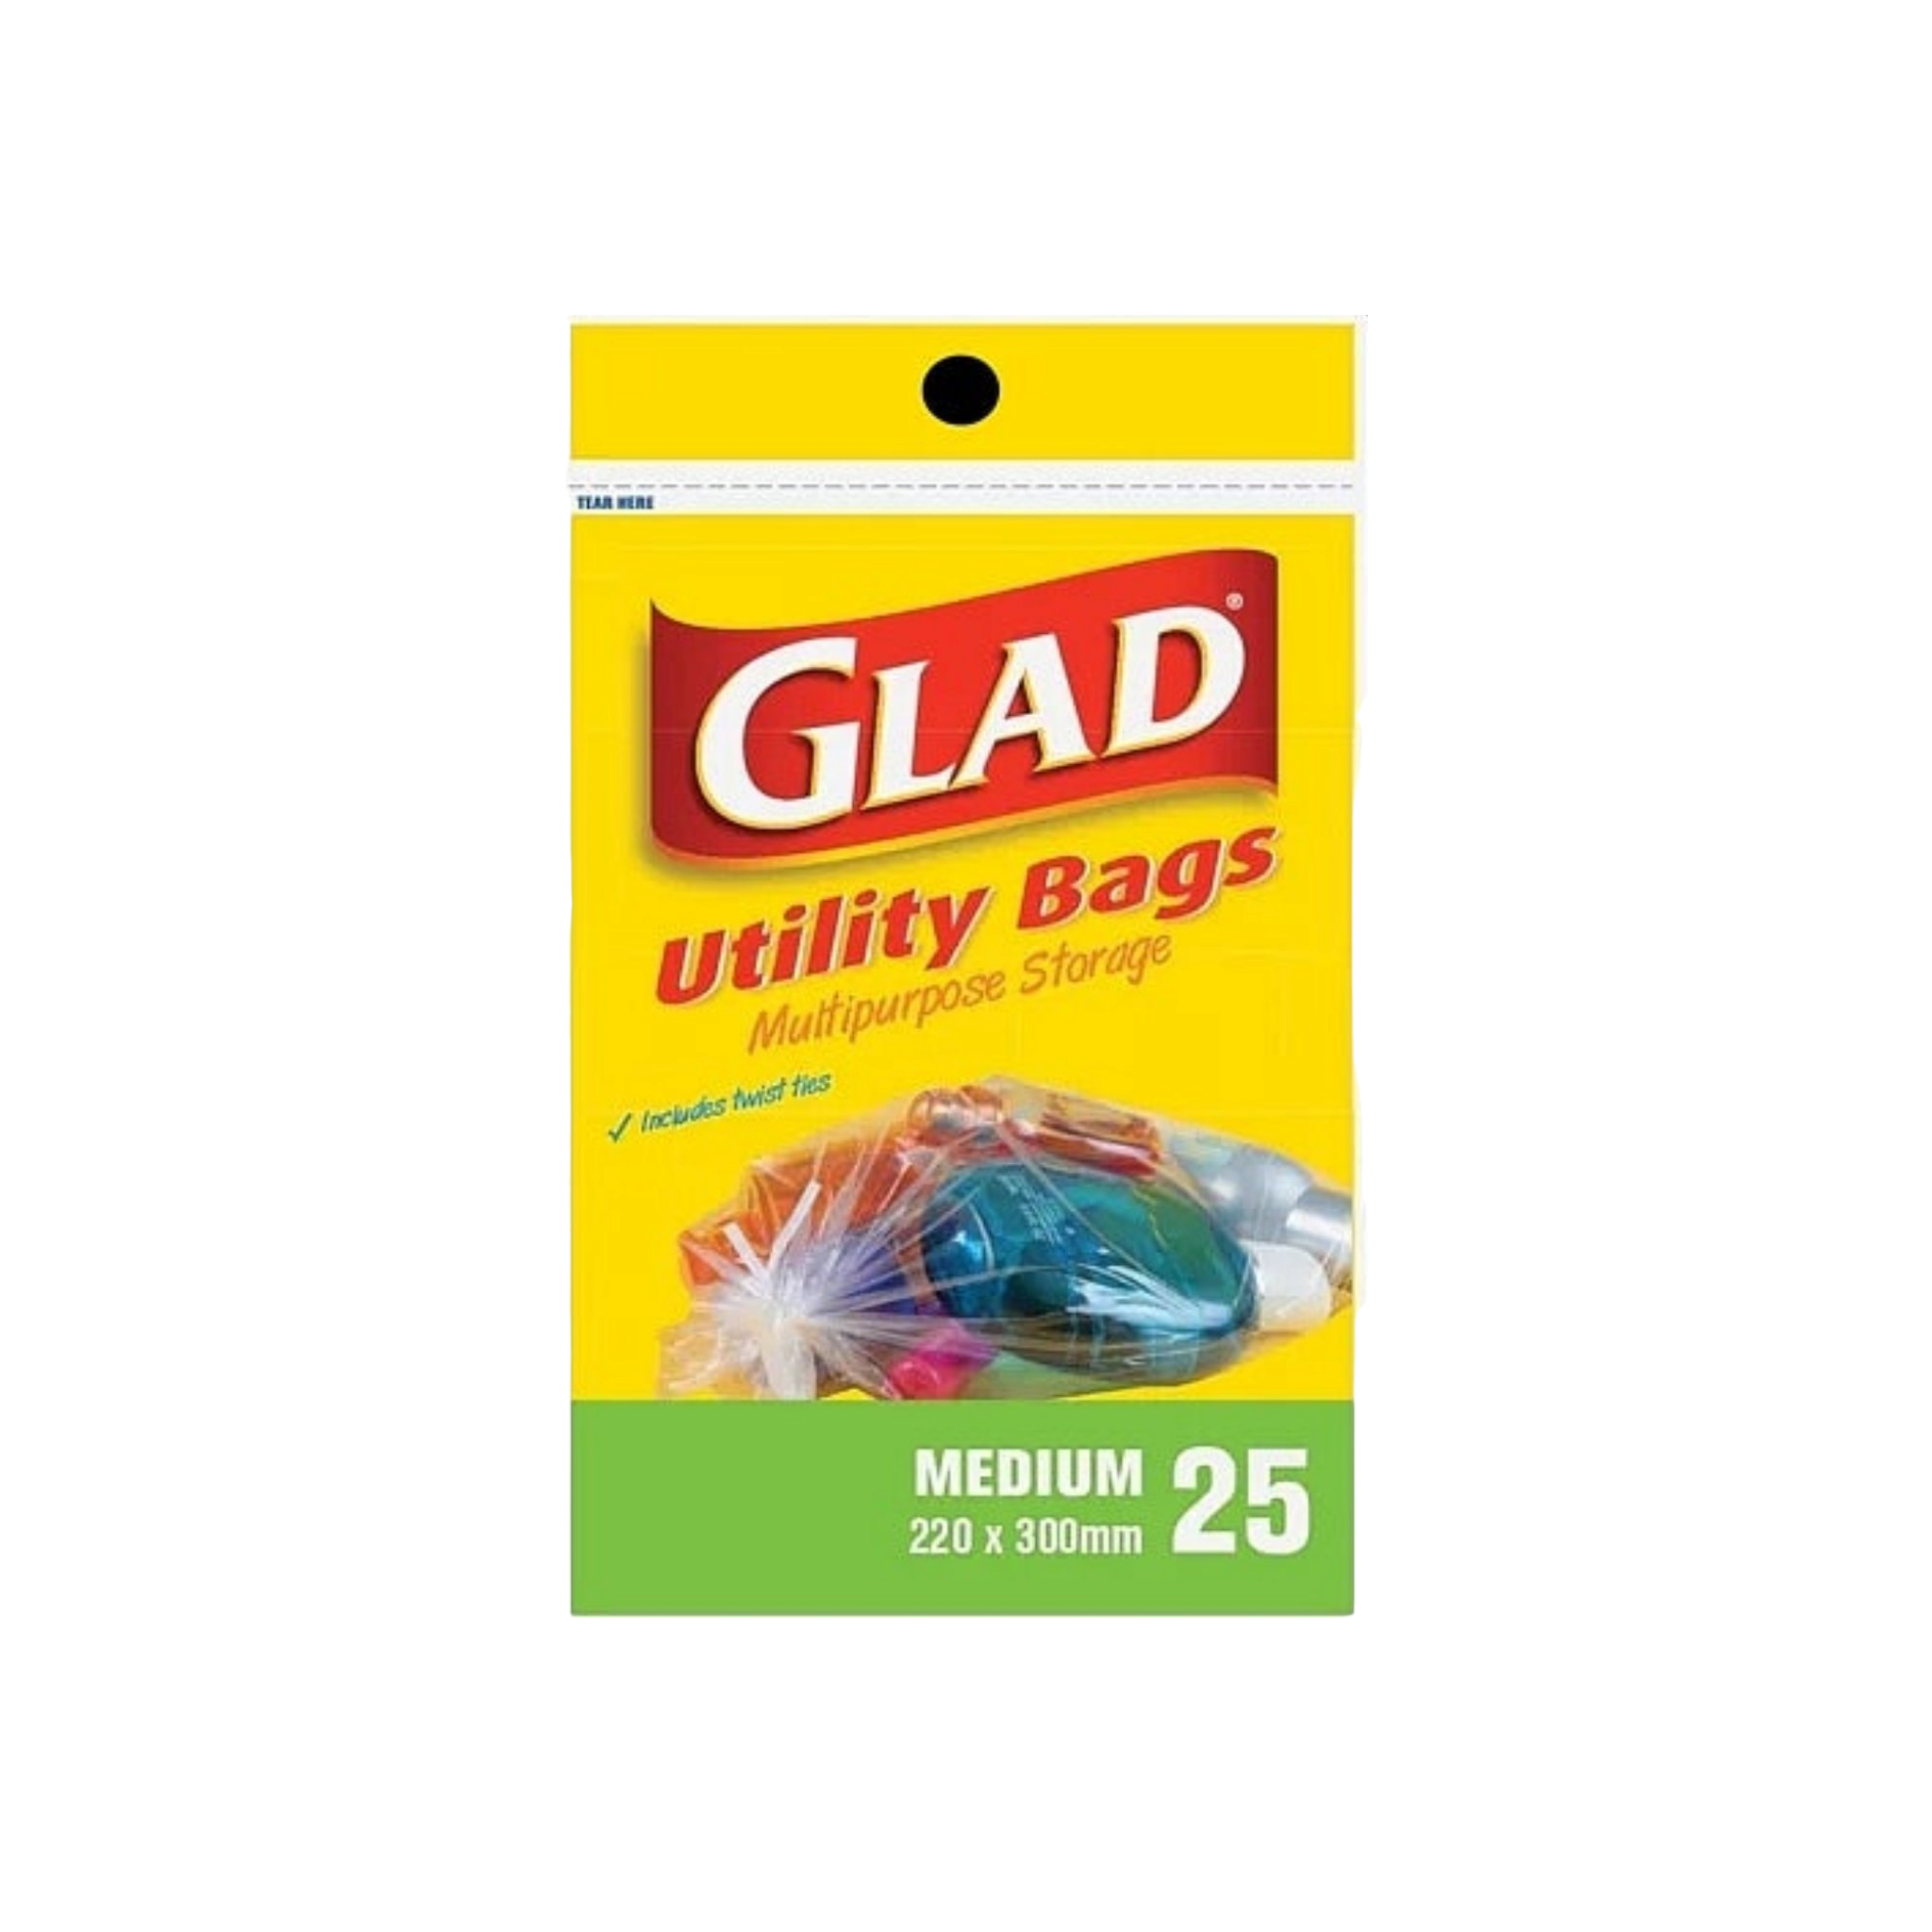 Glad Utility Bags Medium 220x300mm 25pcs